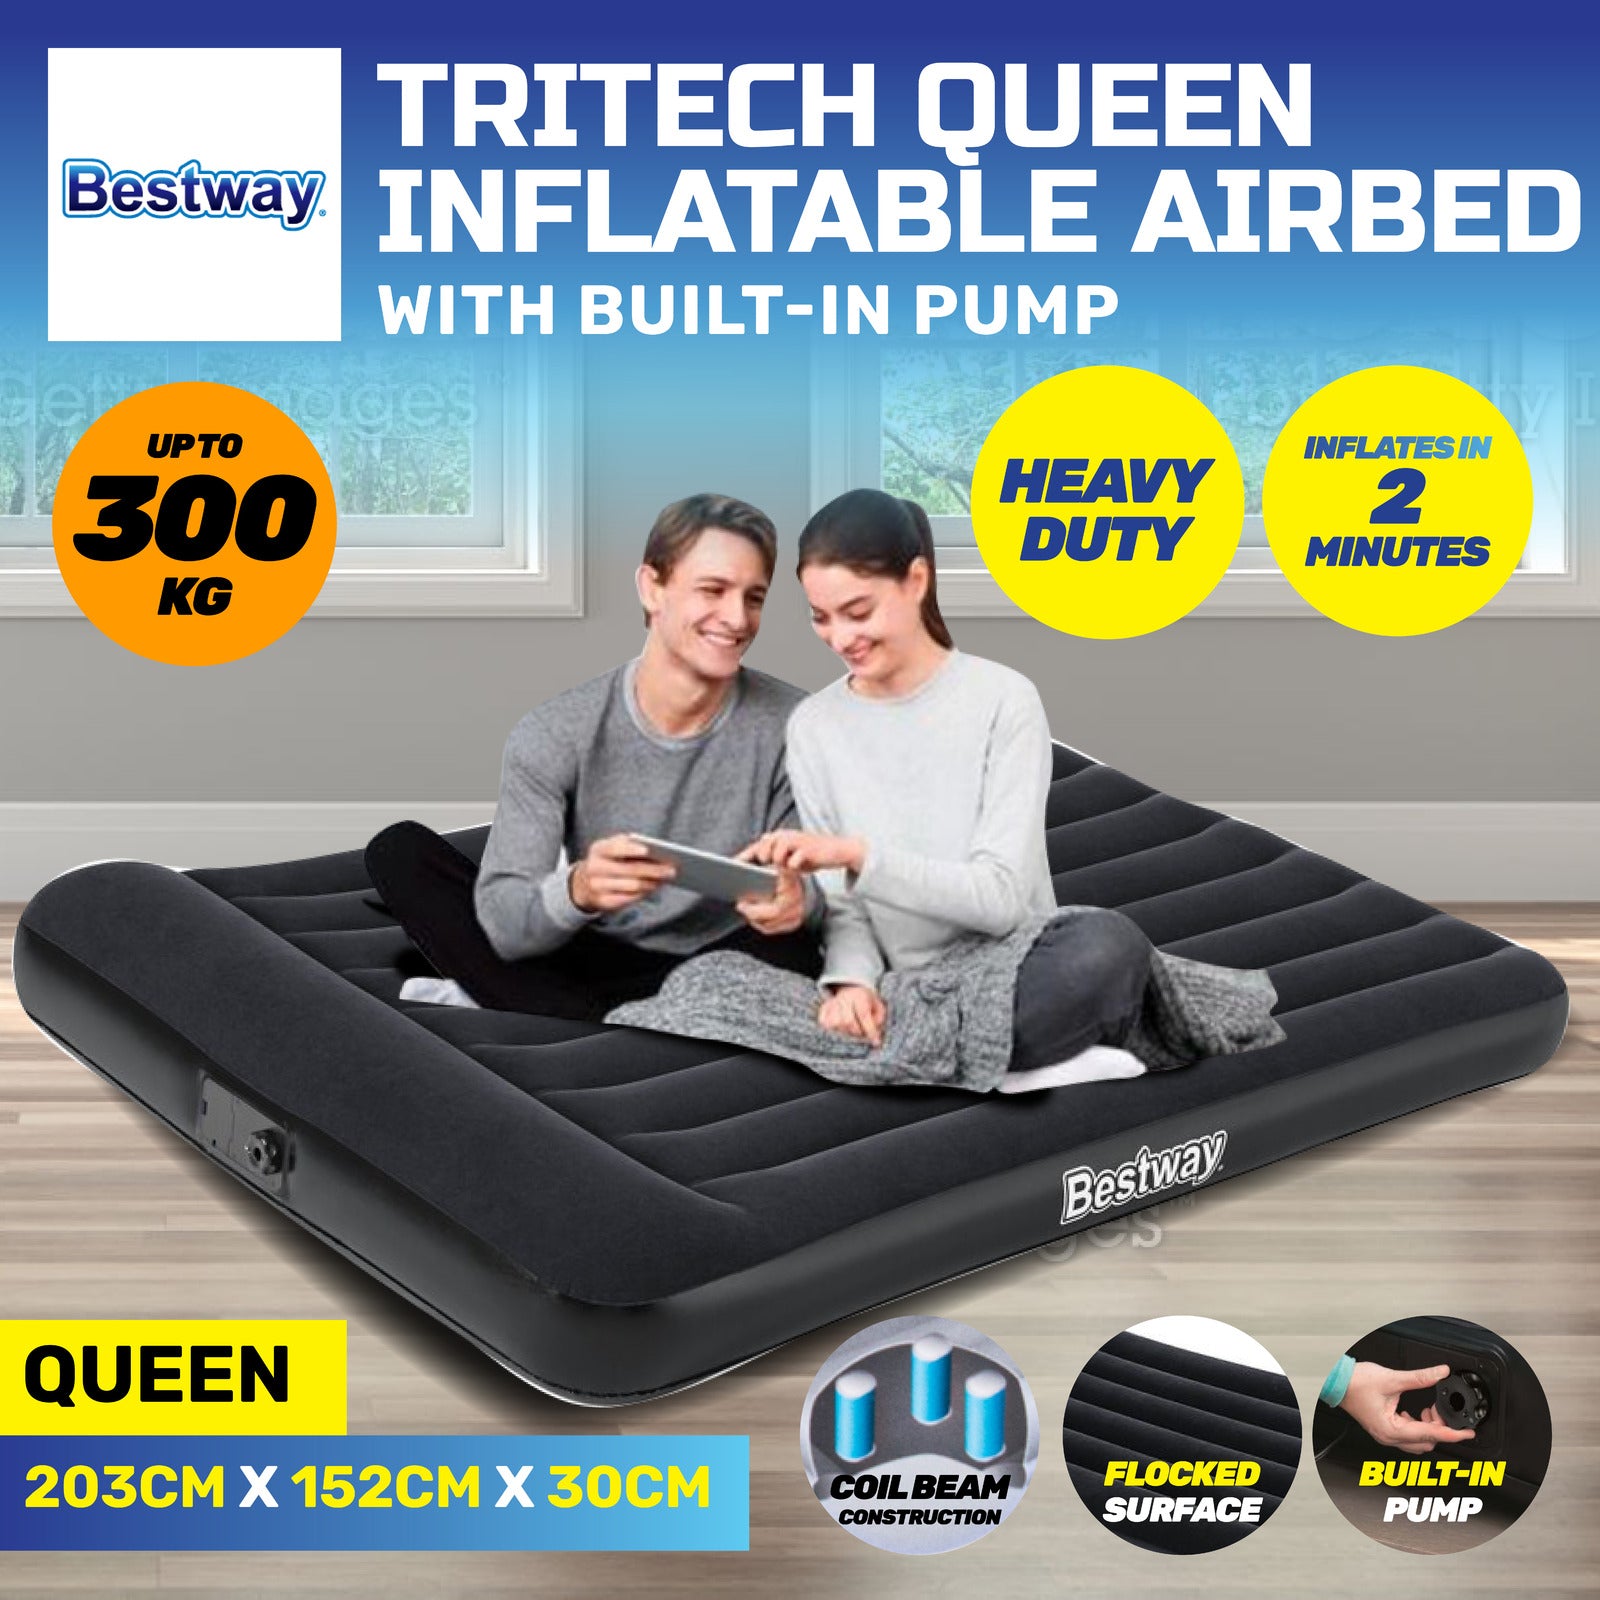 Bestway Queen Inflatable Air Bed Tritech Built-In Pump Heavy Duty - SILBERSHELL